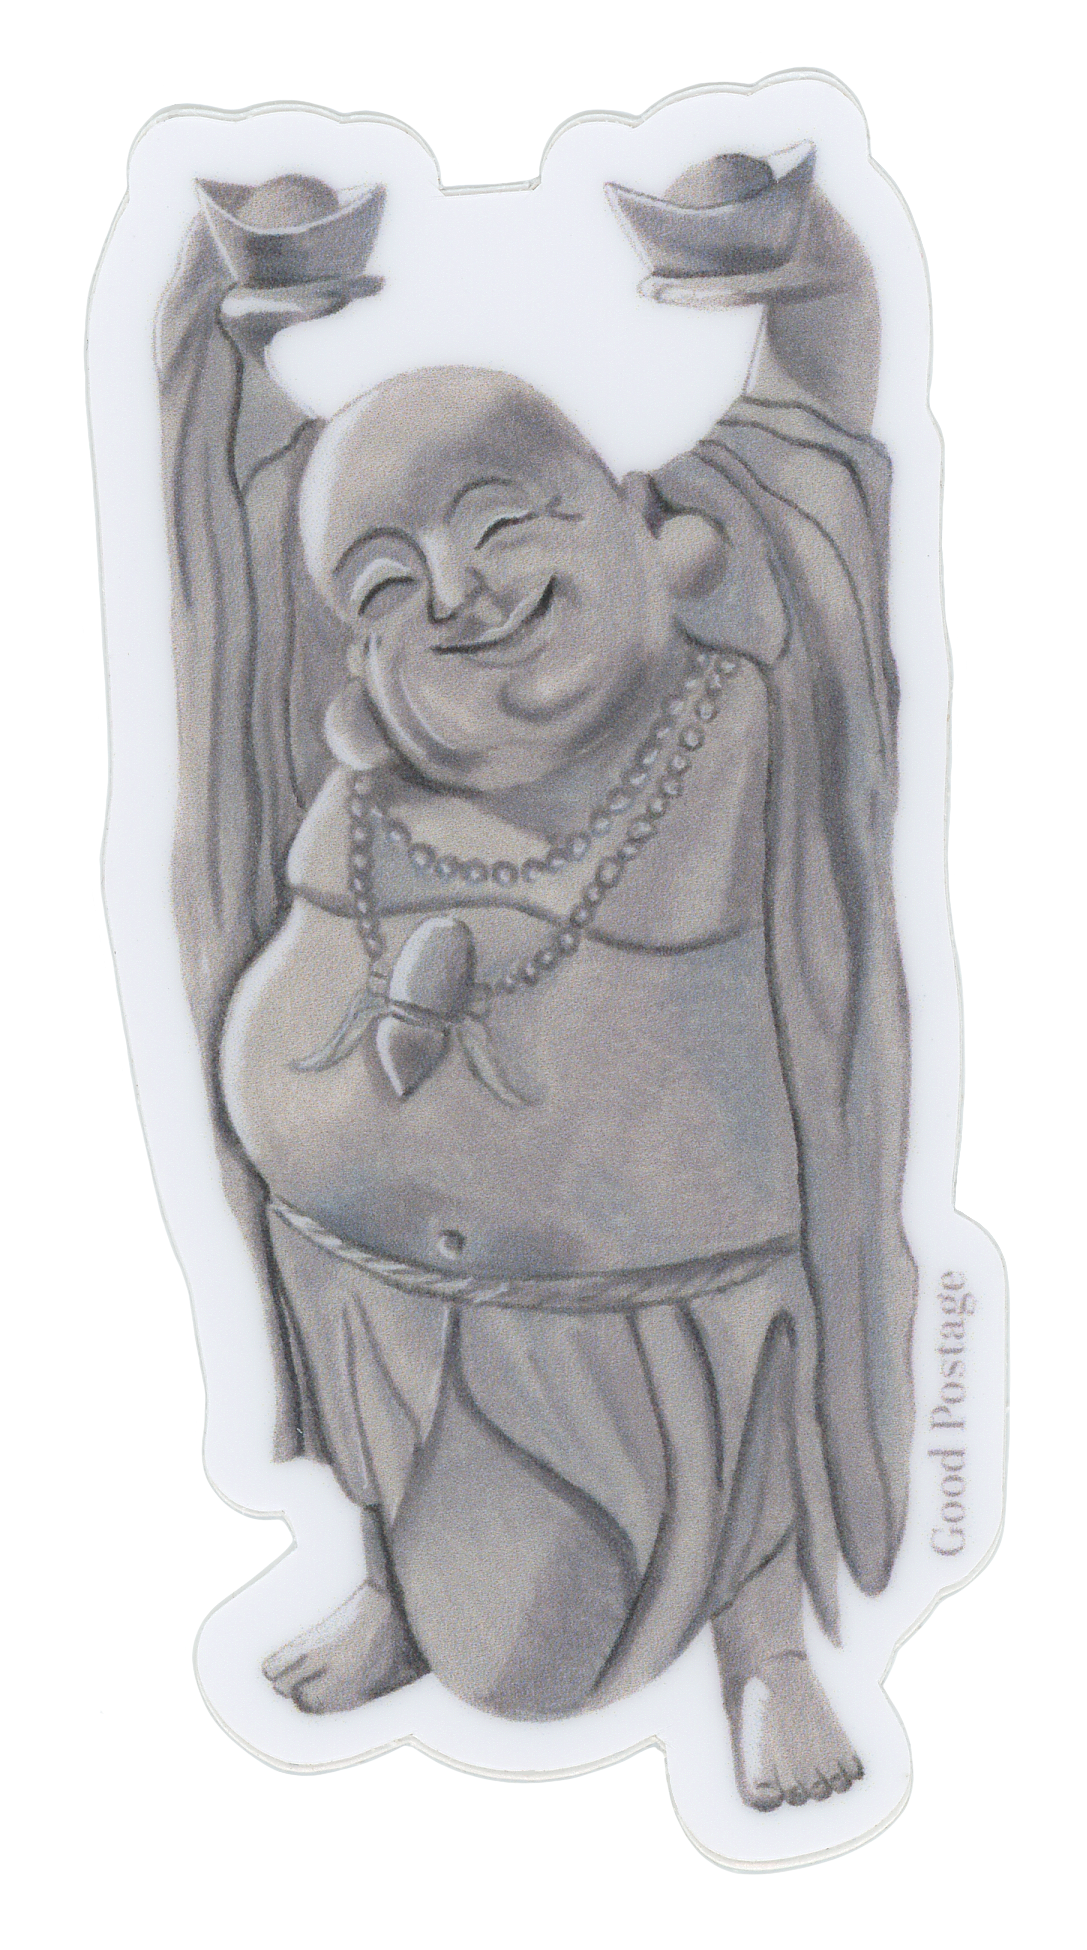 370 Laughing Buddha Illustrations RoyaltyFree Vector Graphics  Clip Art   iStock  Laughing buddha statue